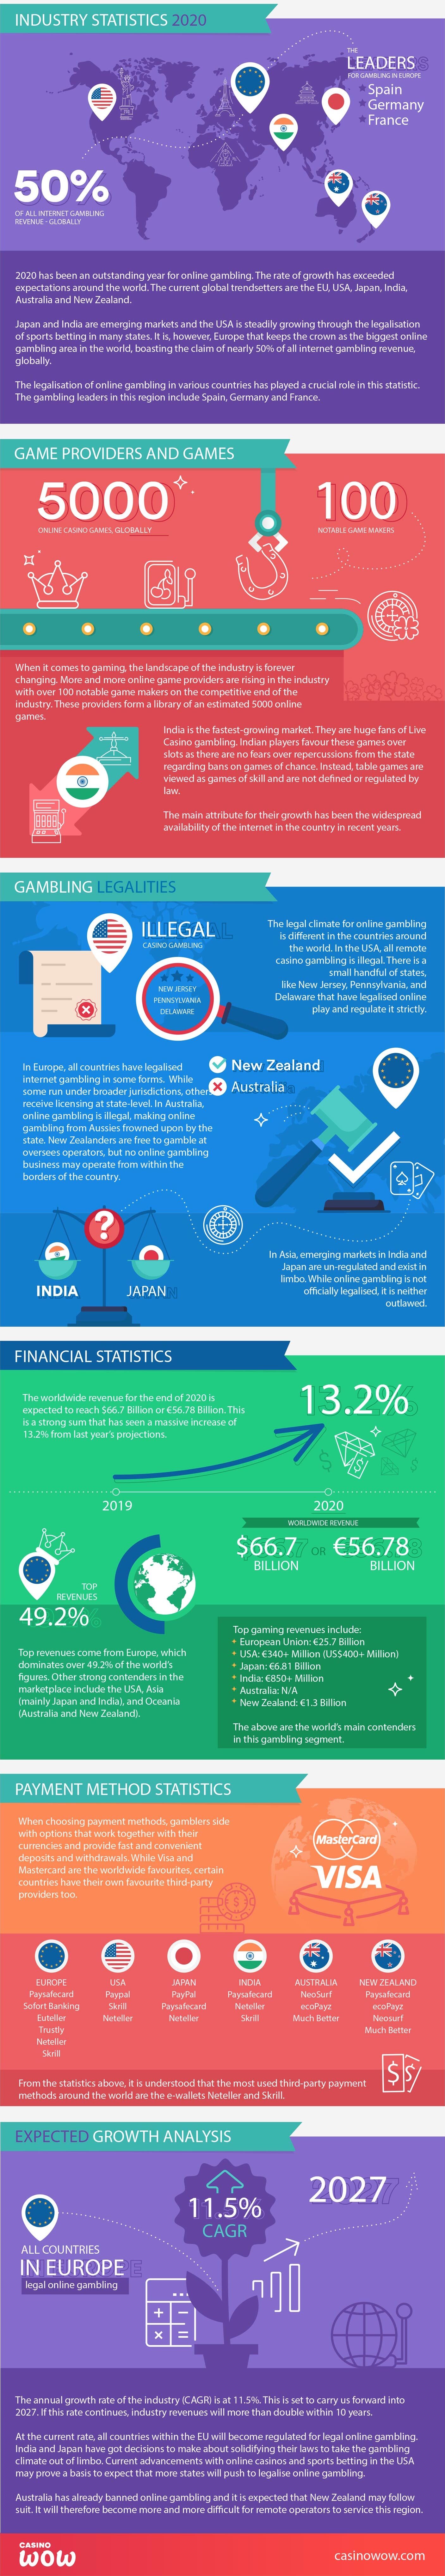 Worldwide Online Gambling Statistics 2020 Infographic